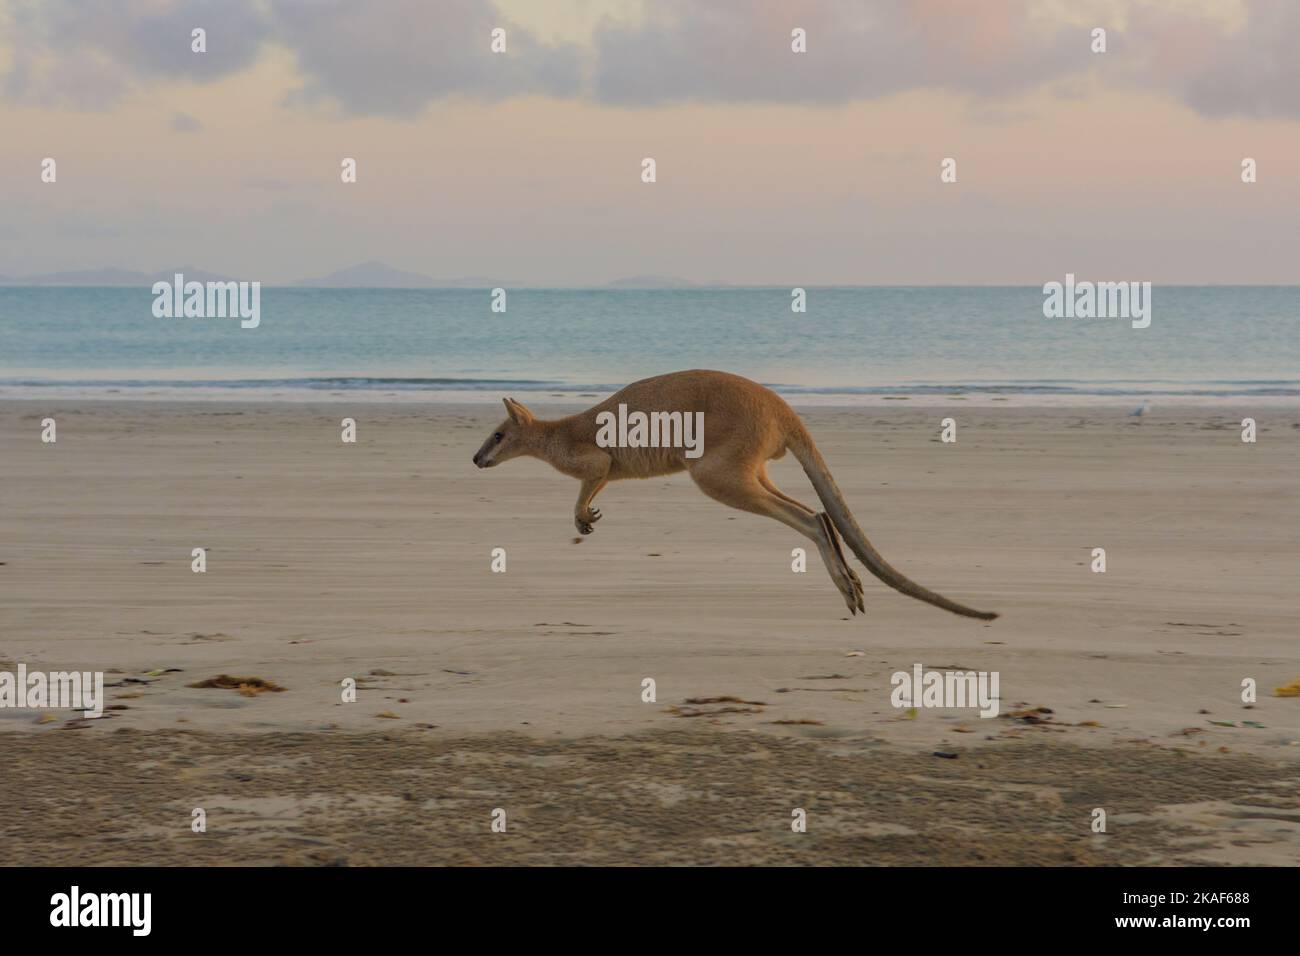 A beautiful view of a kangaroo at the beach Stock Photo